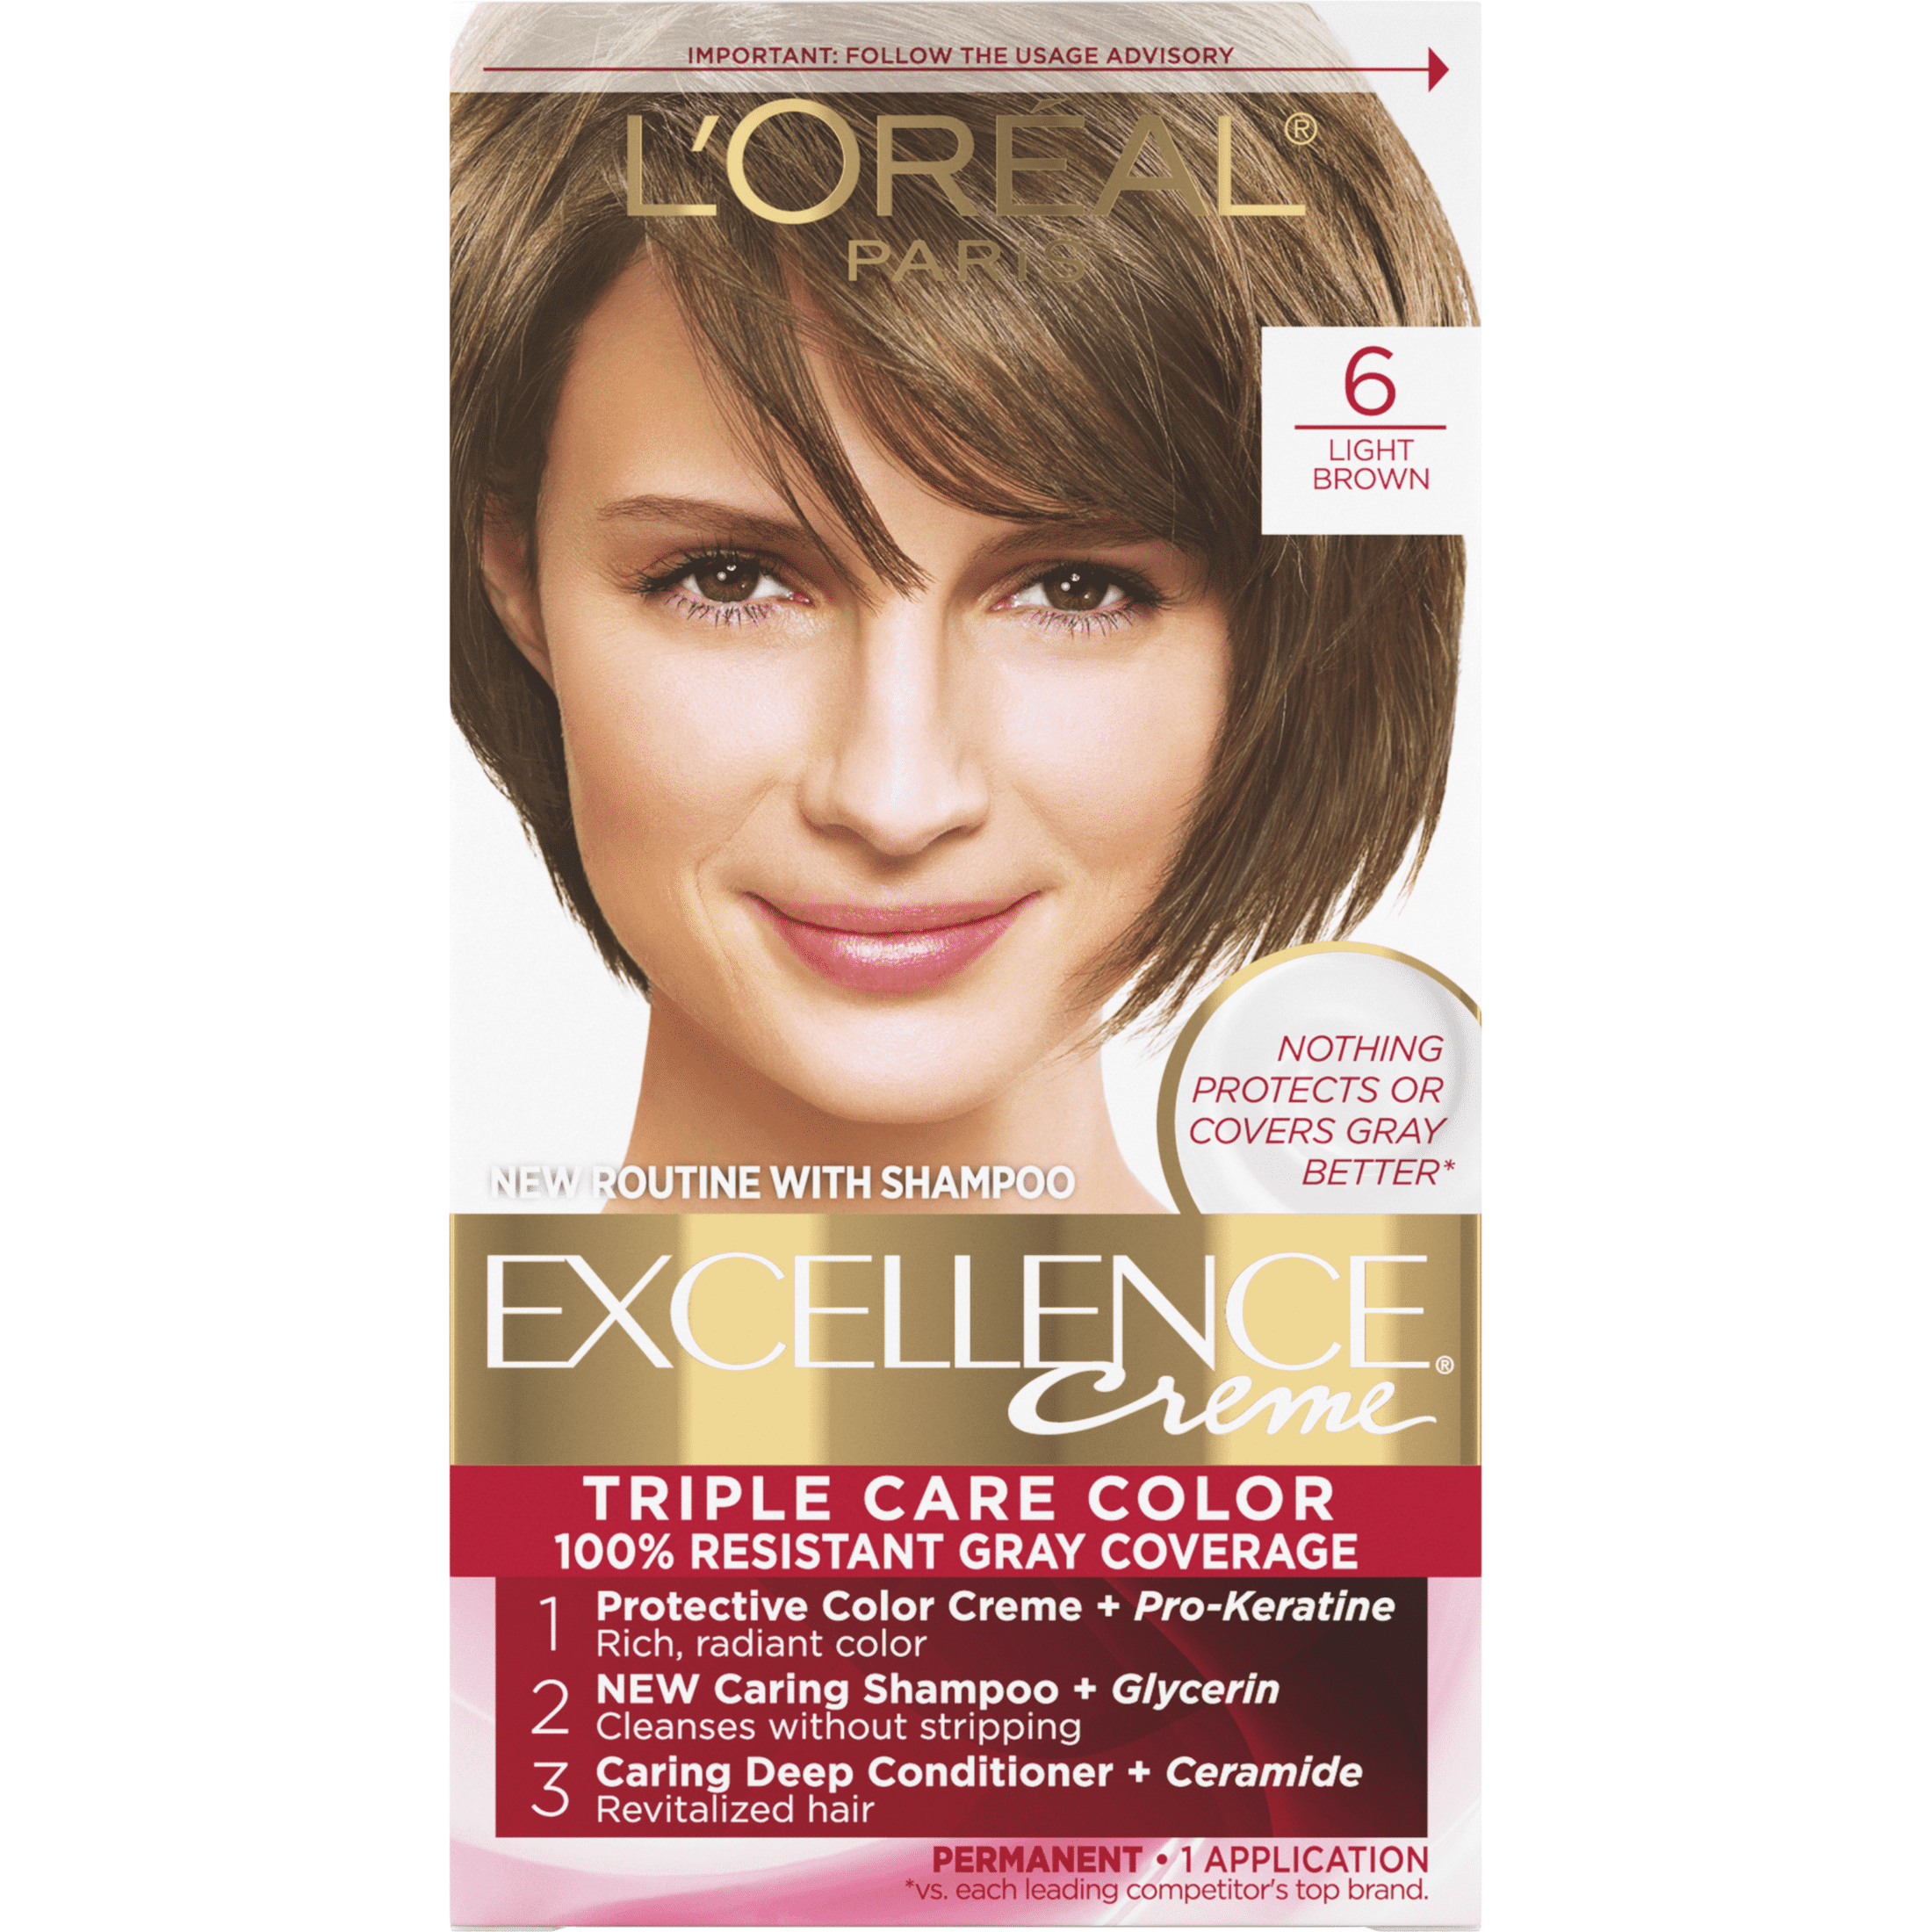 L'Oreal Paris Excellence Creme Hair Color, 3 Dark Brown/Natural Darkest  Brown, 72ml+100g & L'Oreal Paris Excellence Creme Hair Color, 1 Black,  72ml+100g : Amazon.in: Beauty